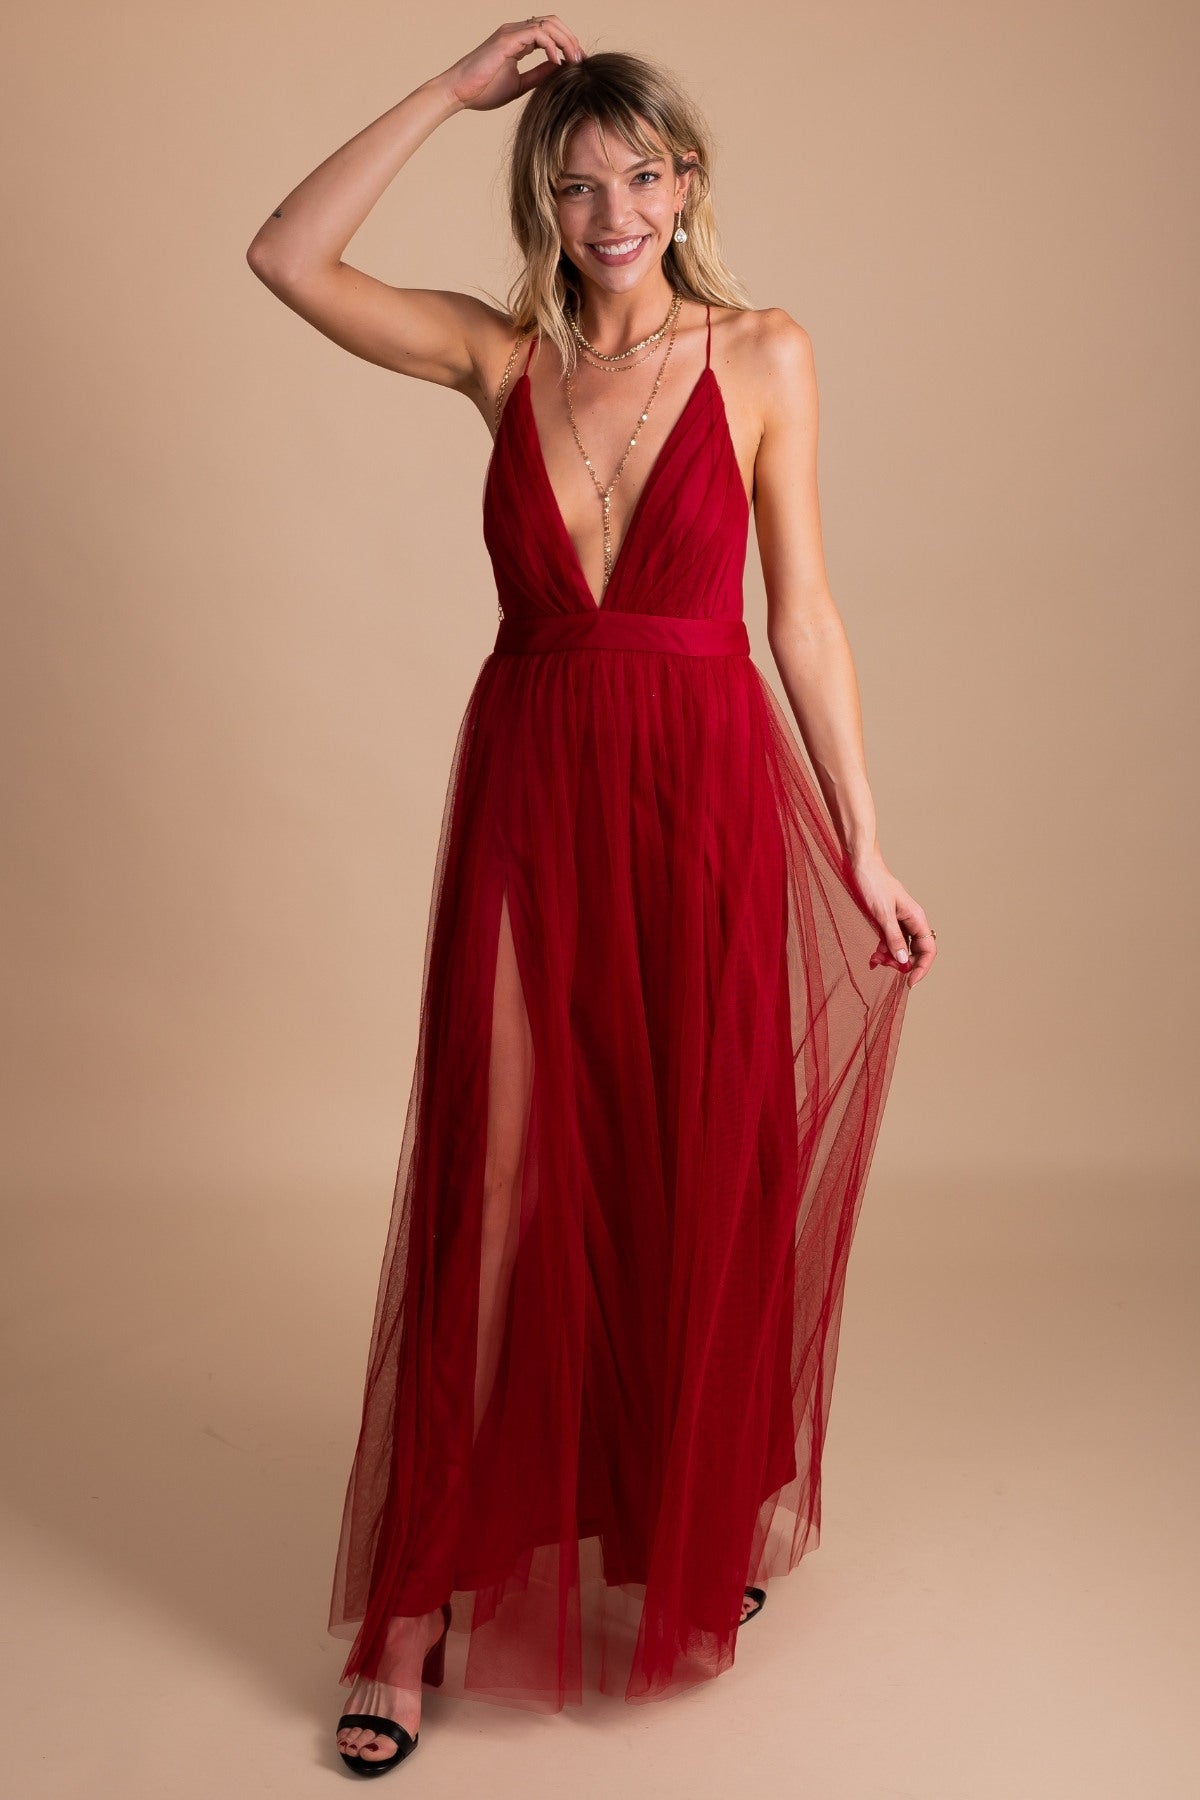 Women's Tulle Formal Dress in Ruby Red